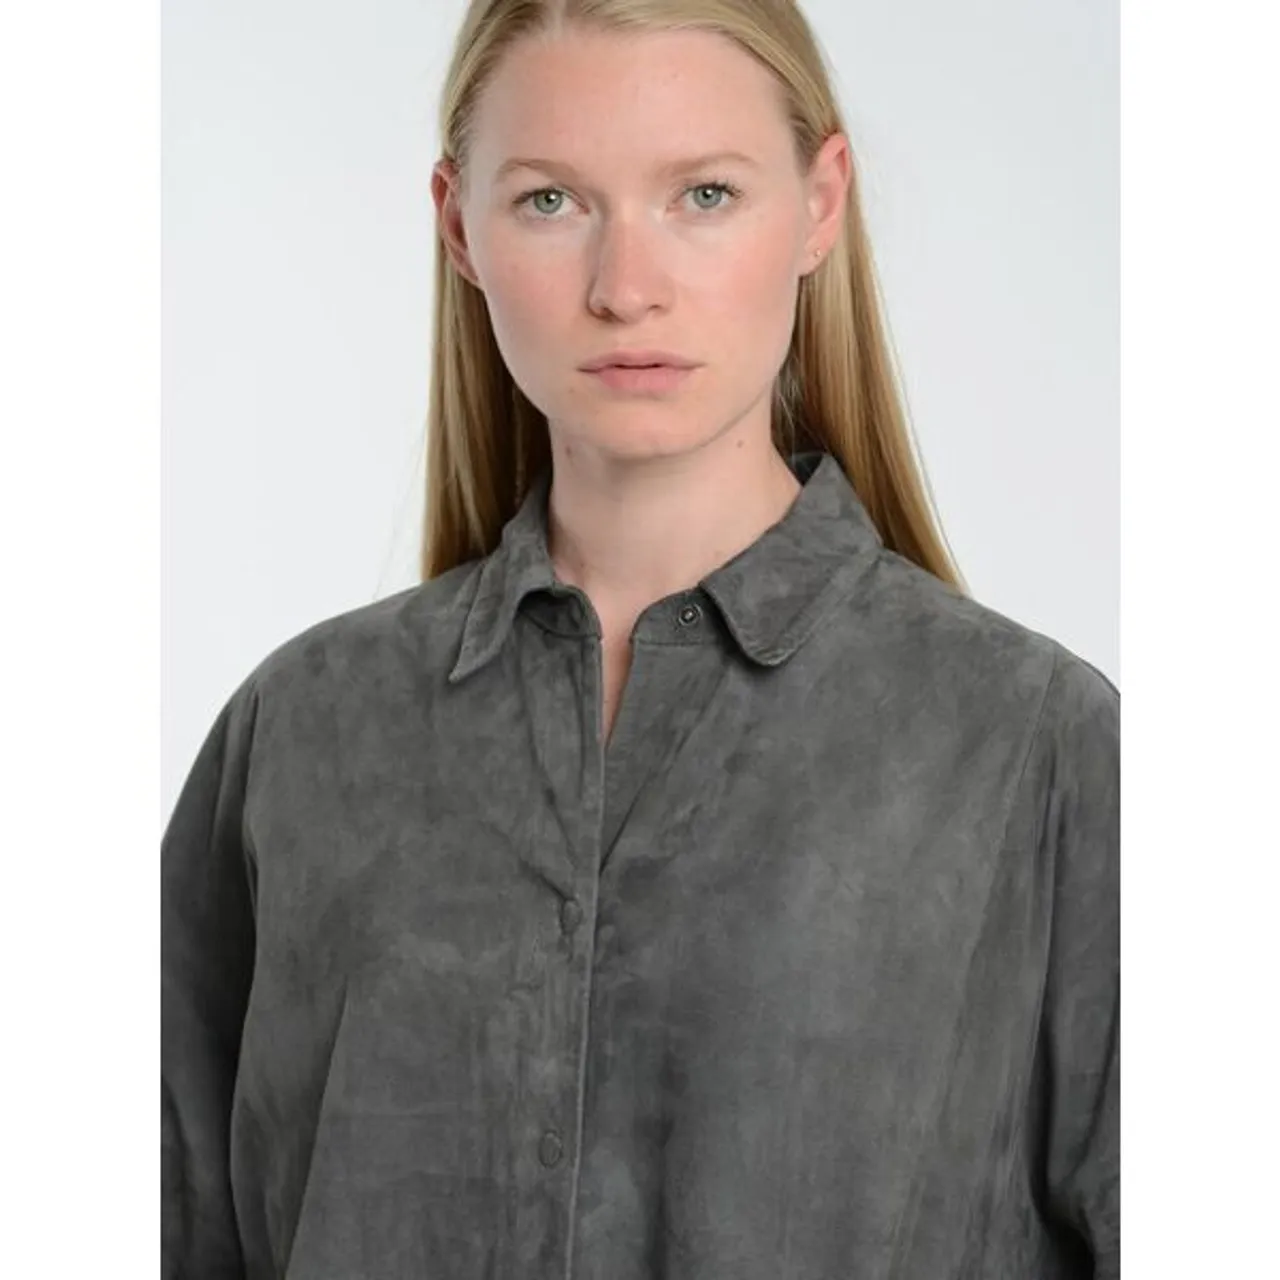 Blusenshirt JAGGER & EVANS "42021282" Gr. XL, grau (anthracite) Mädchen Shirts Blusenshirts